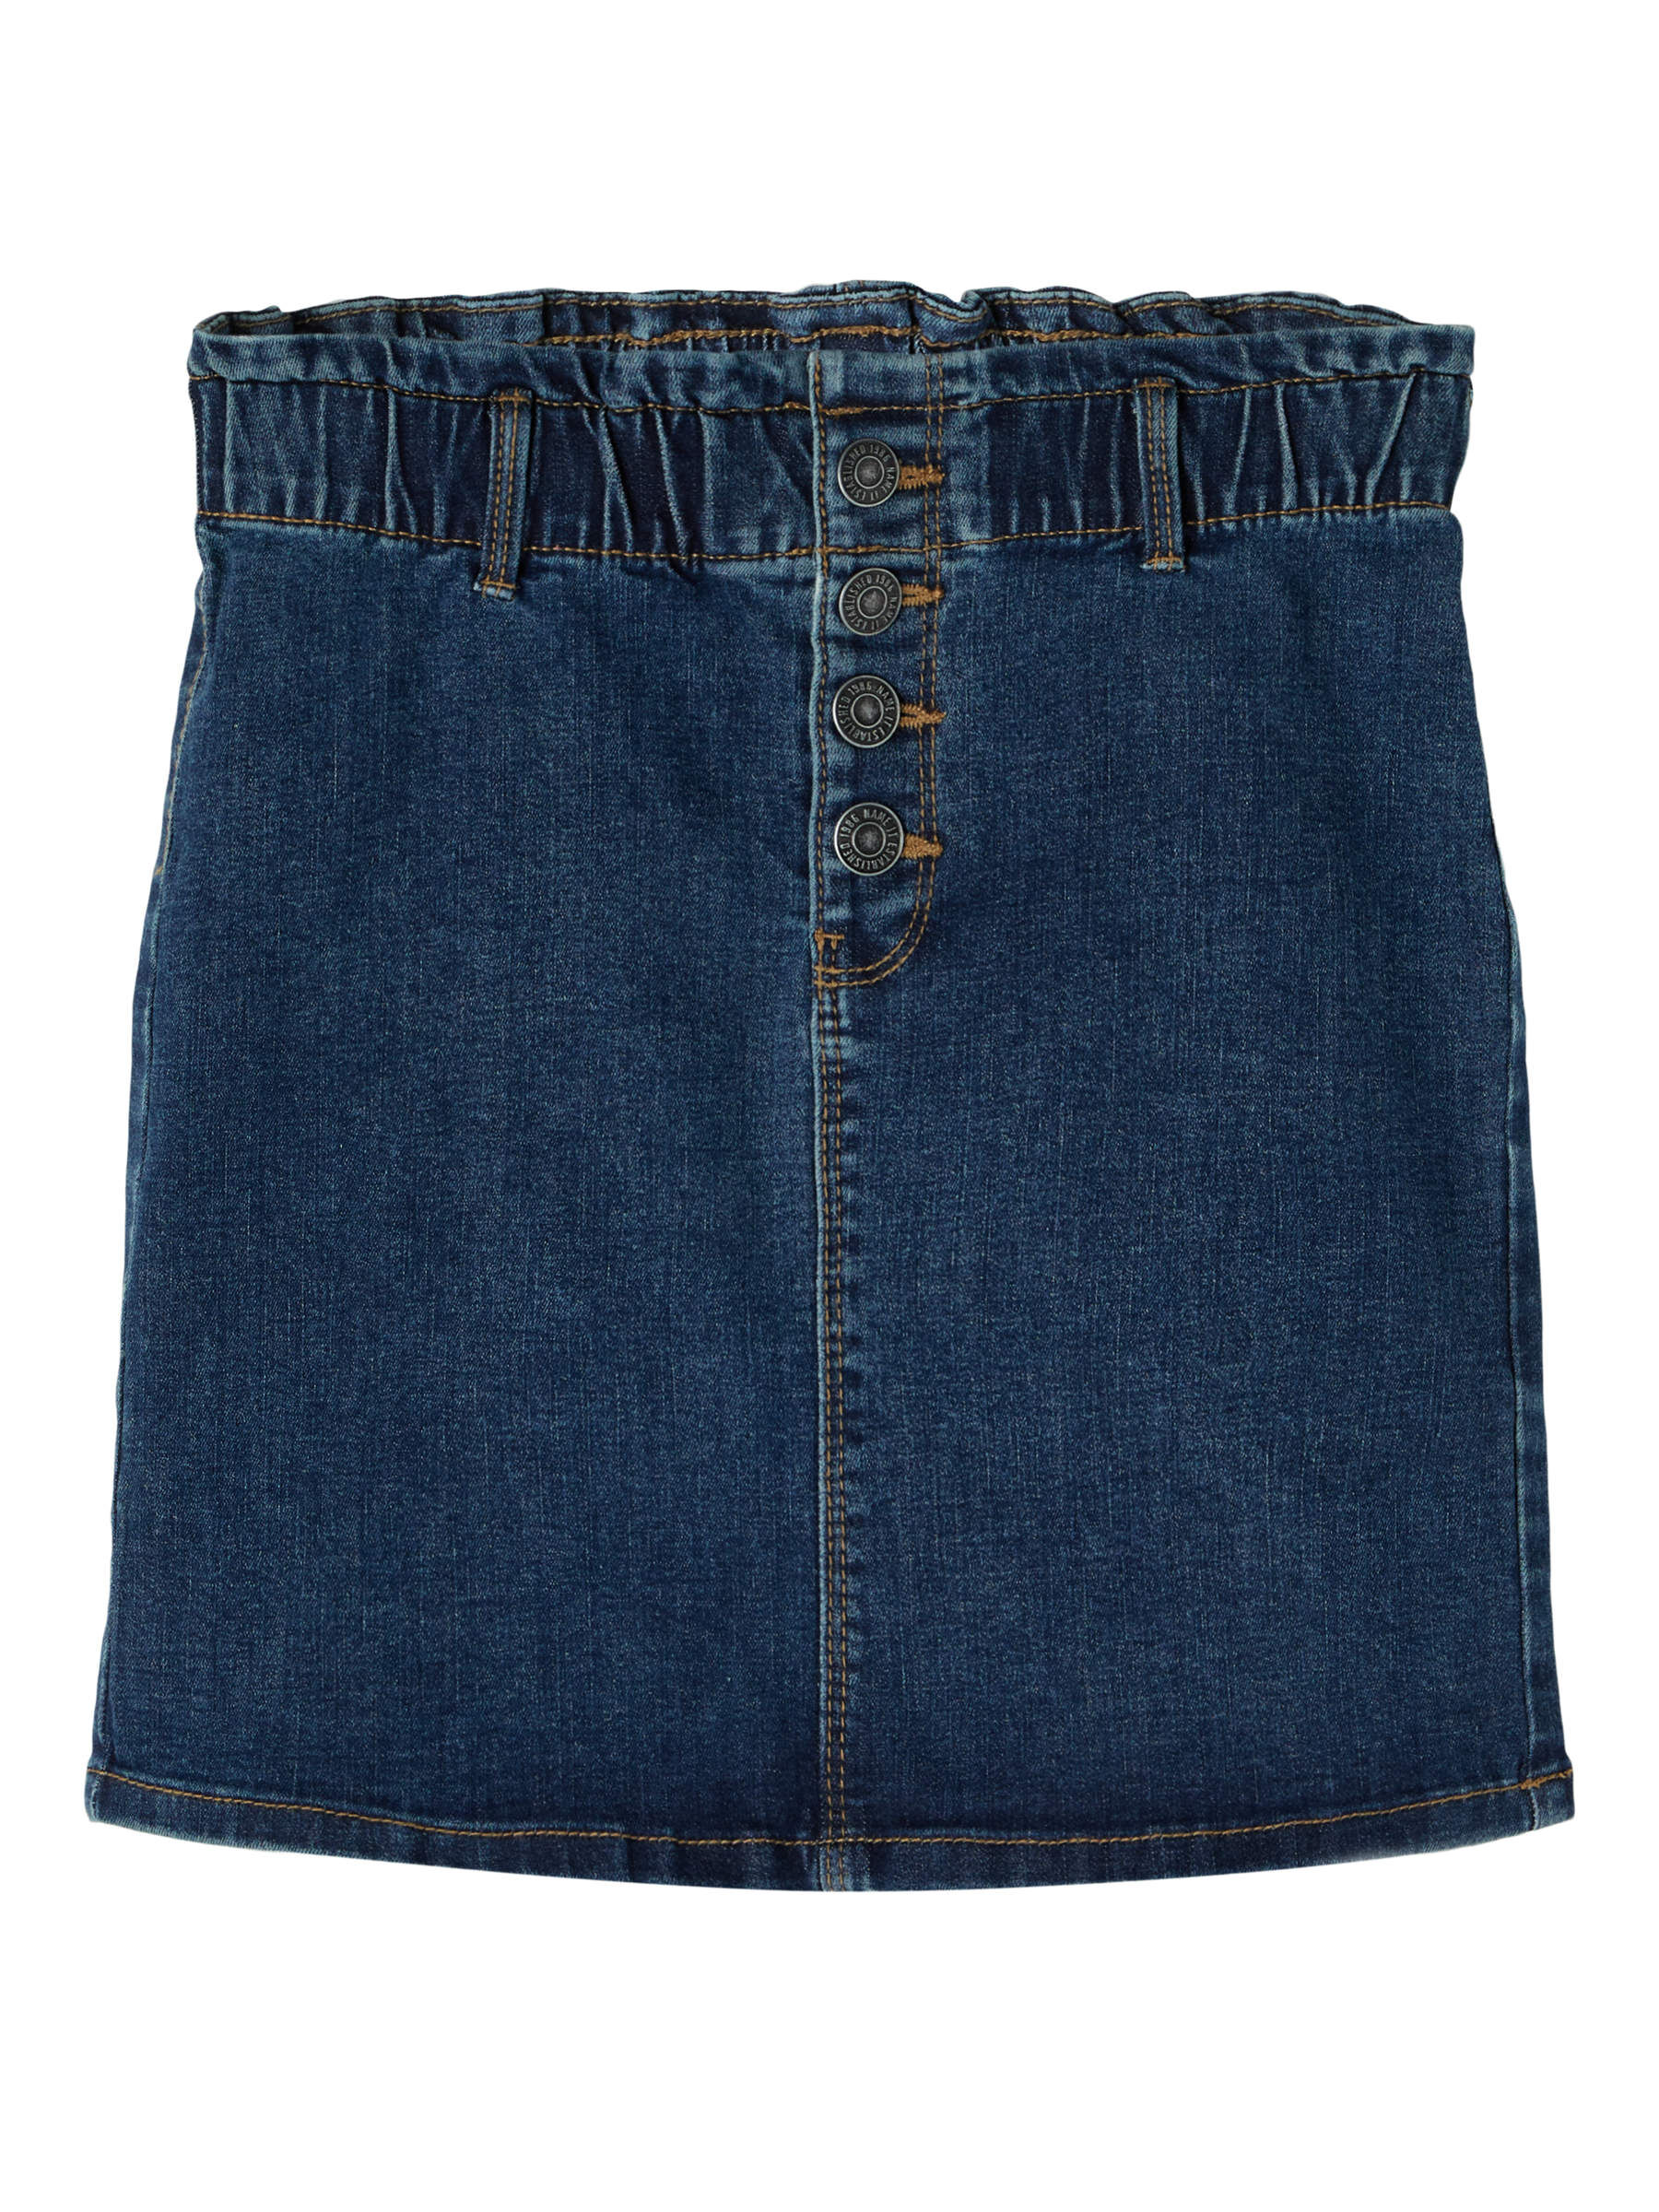 discount 74% KIDS FASHION Skirts Jean Name it Name it denim skirt Blue 92                  EU 